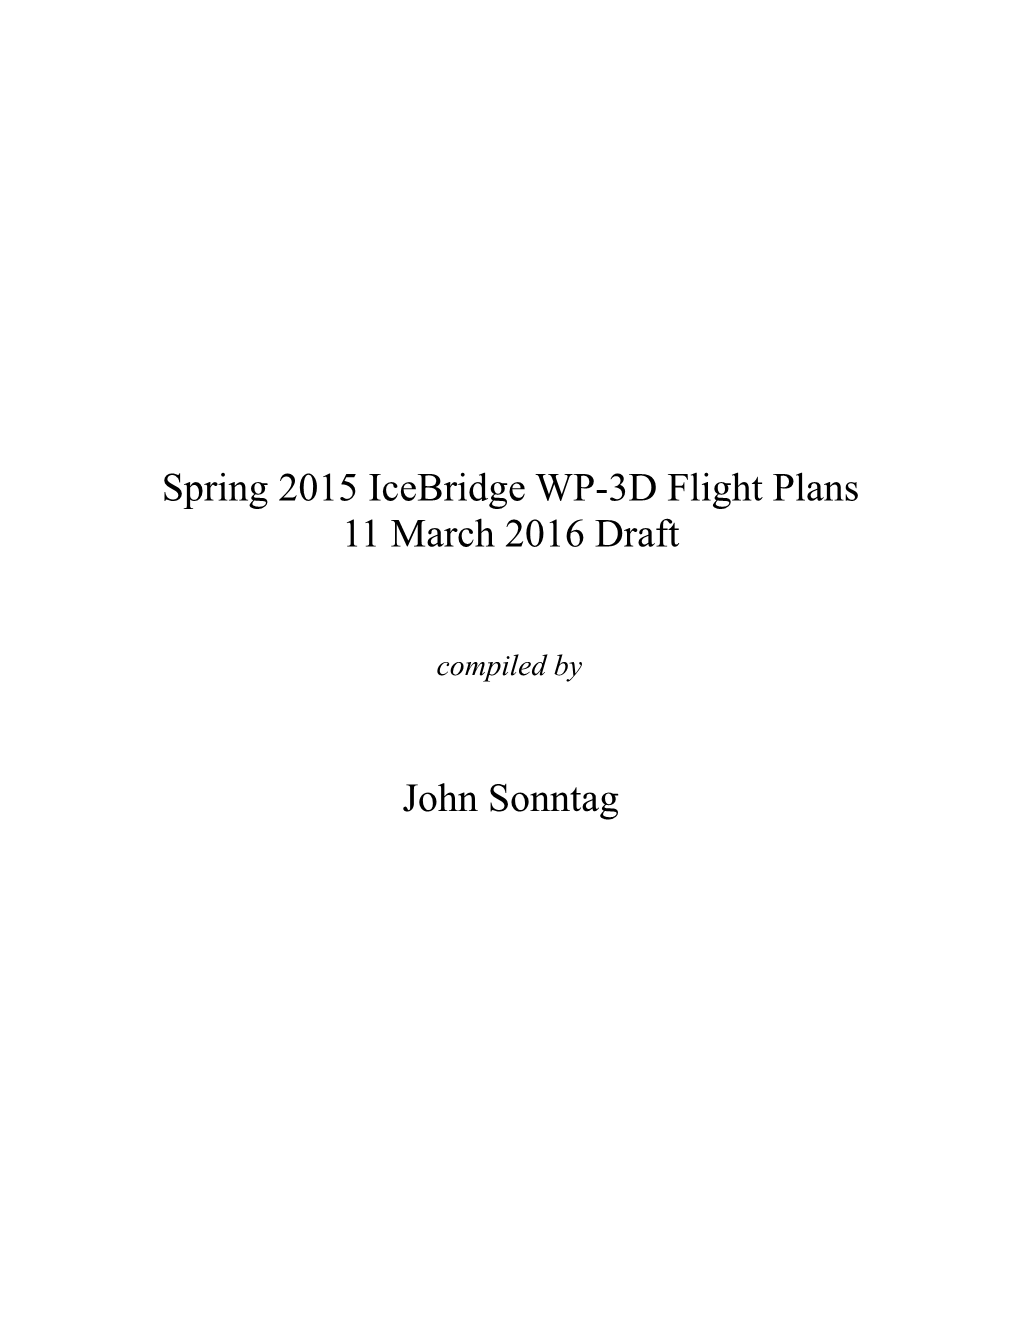 Adobe PDF of Proposed Flight Lines